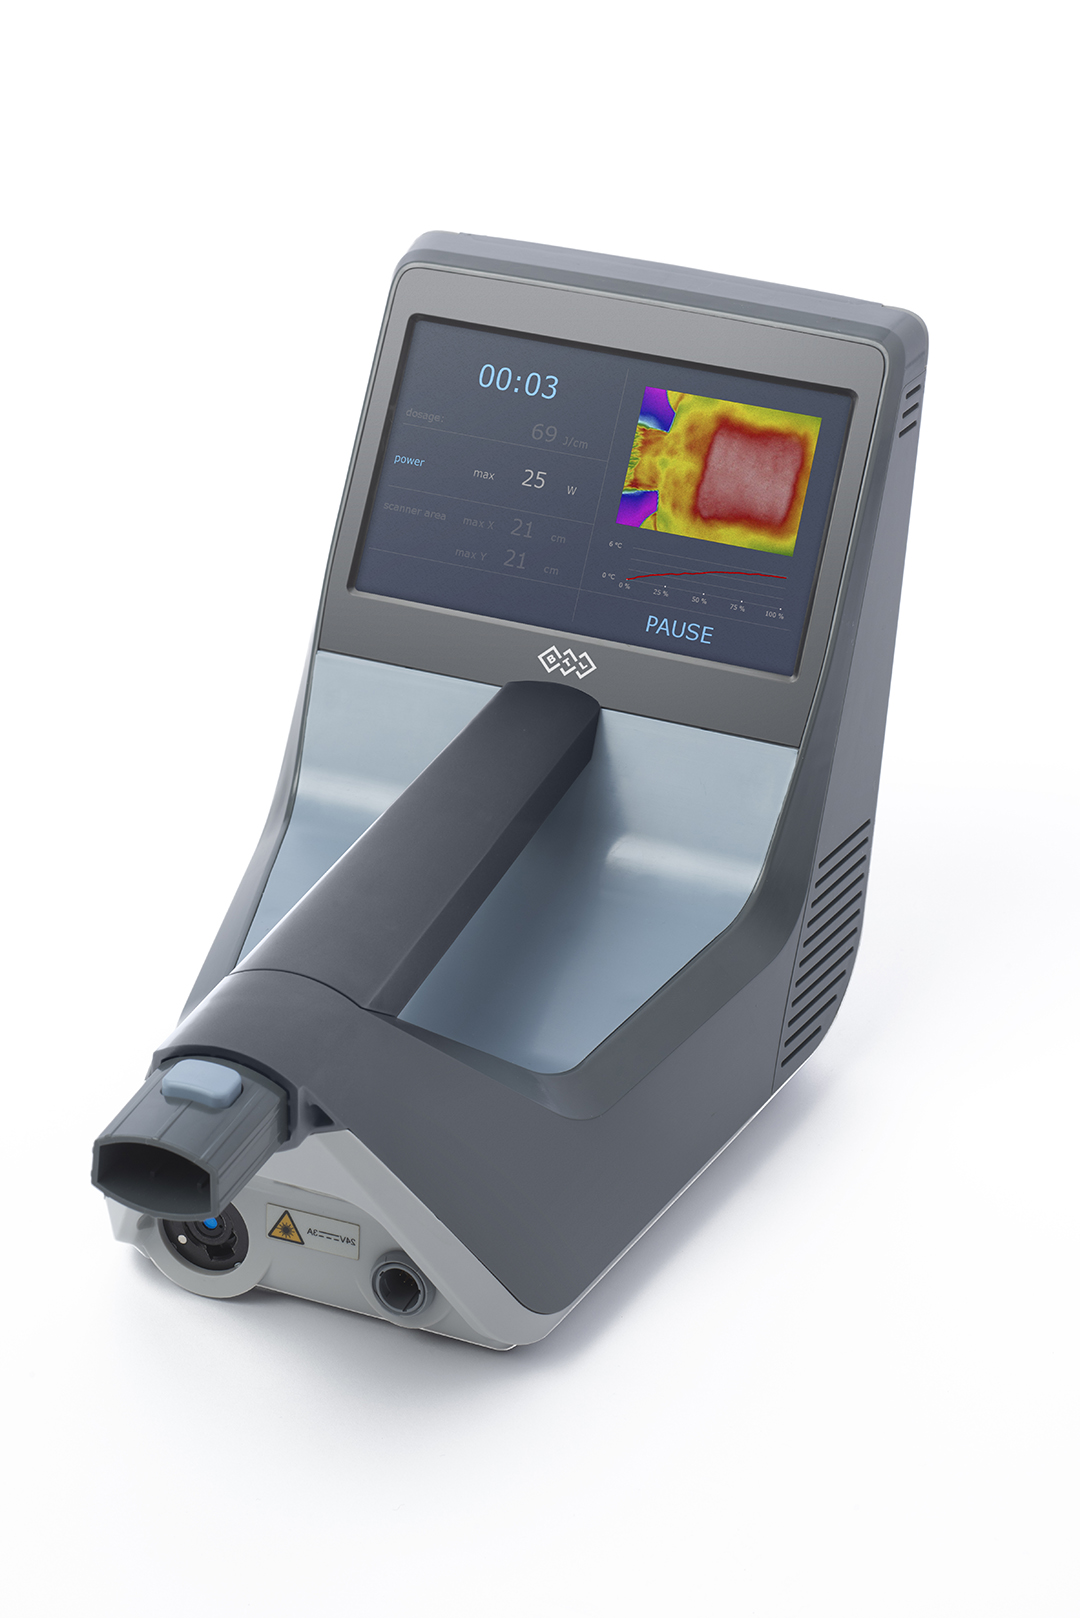 BTL Medical 物理治療,痛症管理,自動化激光掃描系統